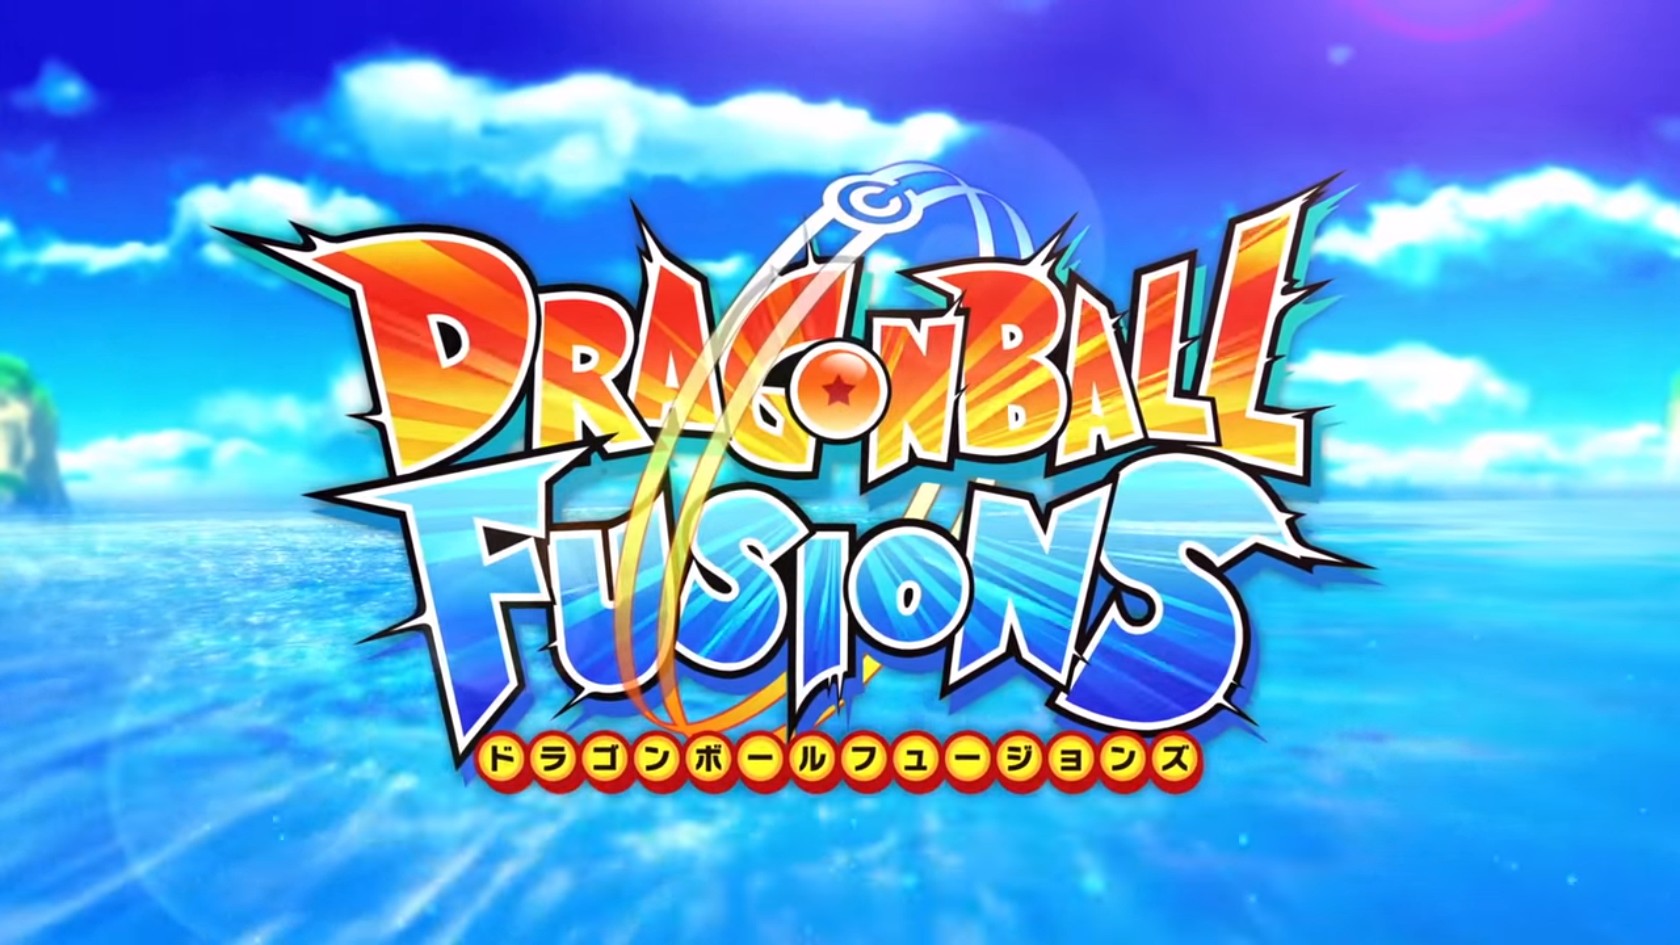 Dragon ball fusions illus 7